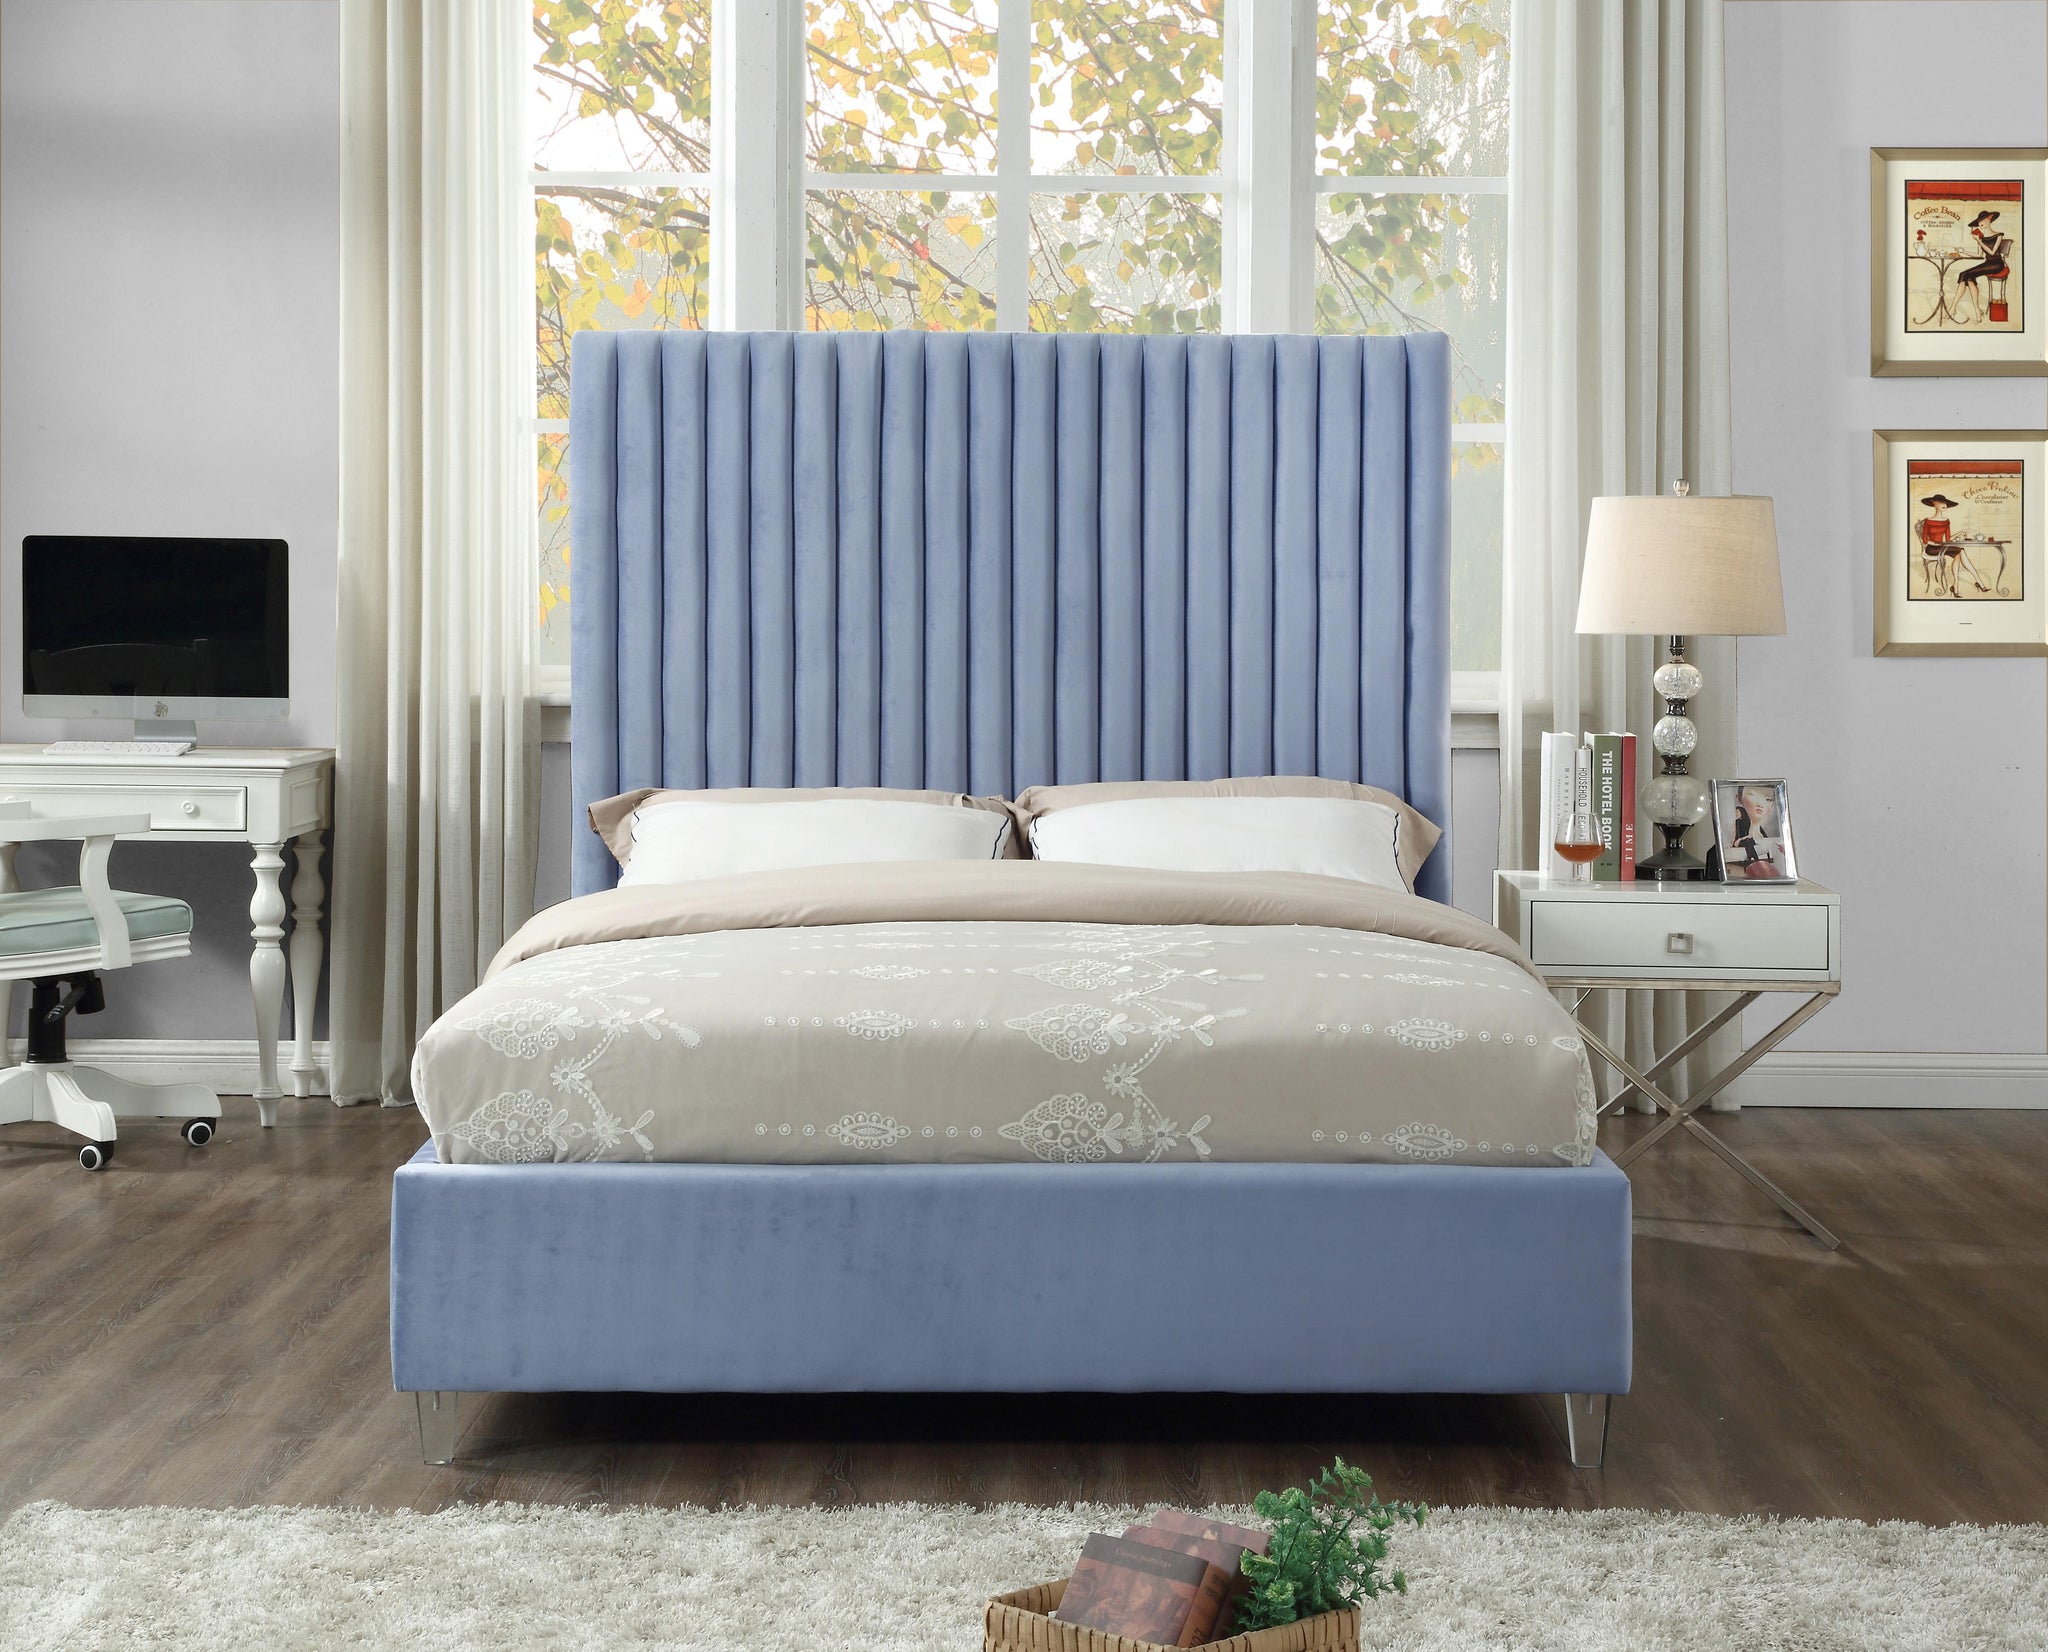 Candace Sky Blue Velvet King Bed - Furnish 4 Less 98 (NY)*